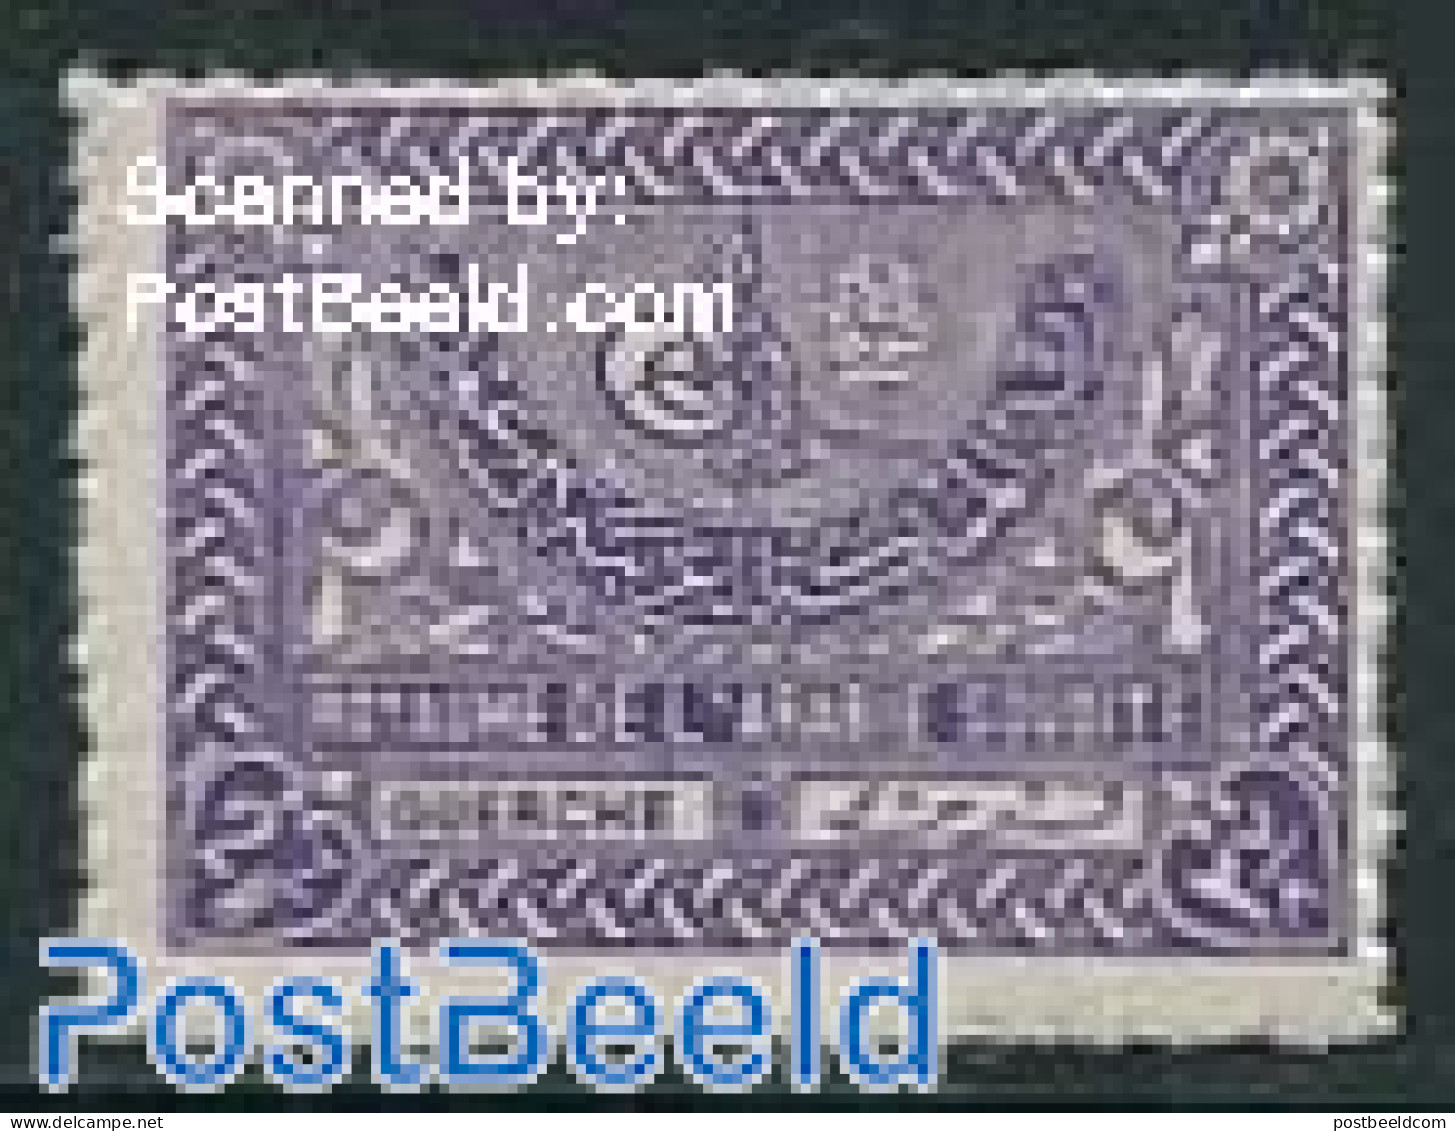 Saudi Arabia 1956 2 7/8G, Stamp Out Of Set, Mint NH - Arabie Saoudite